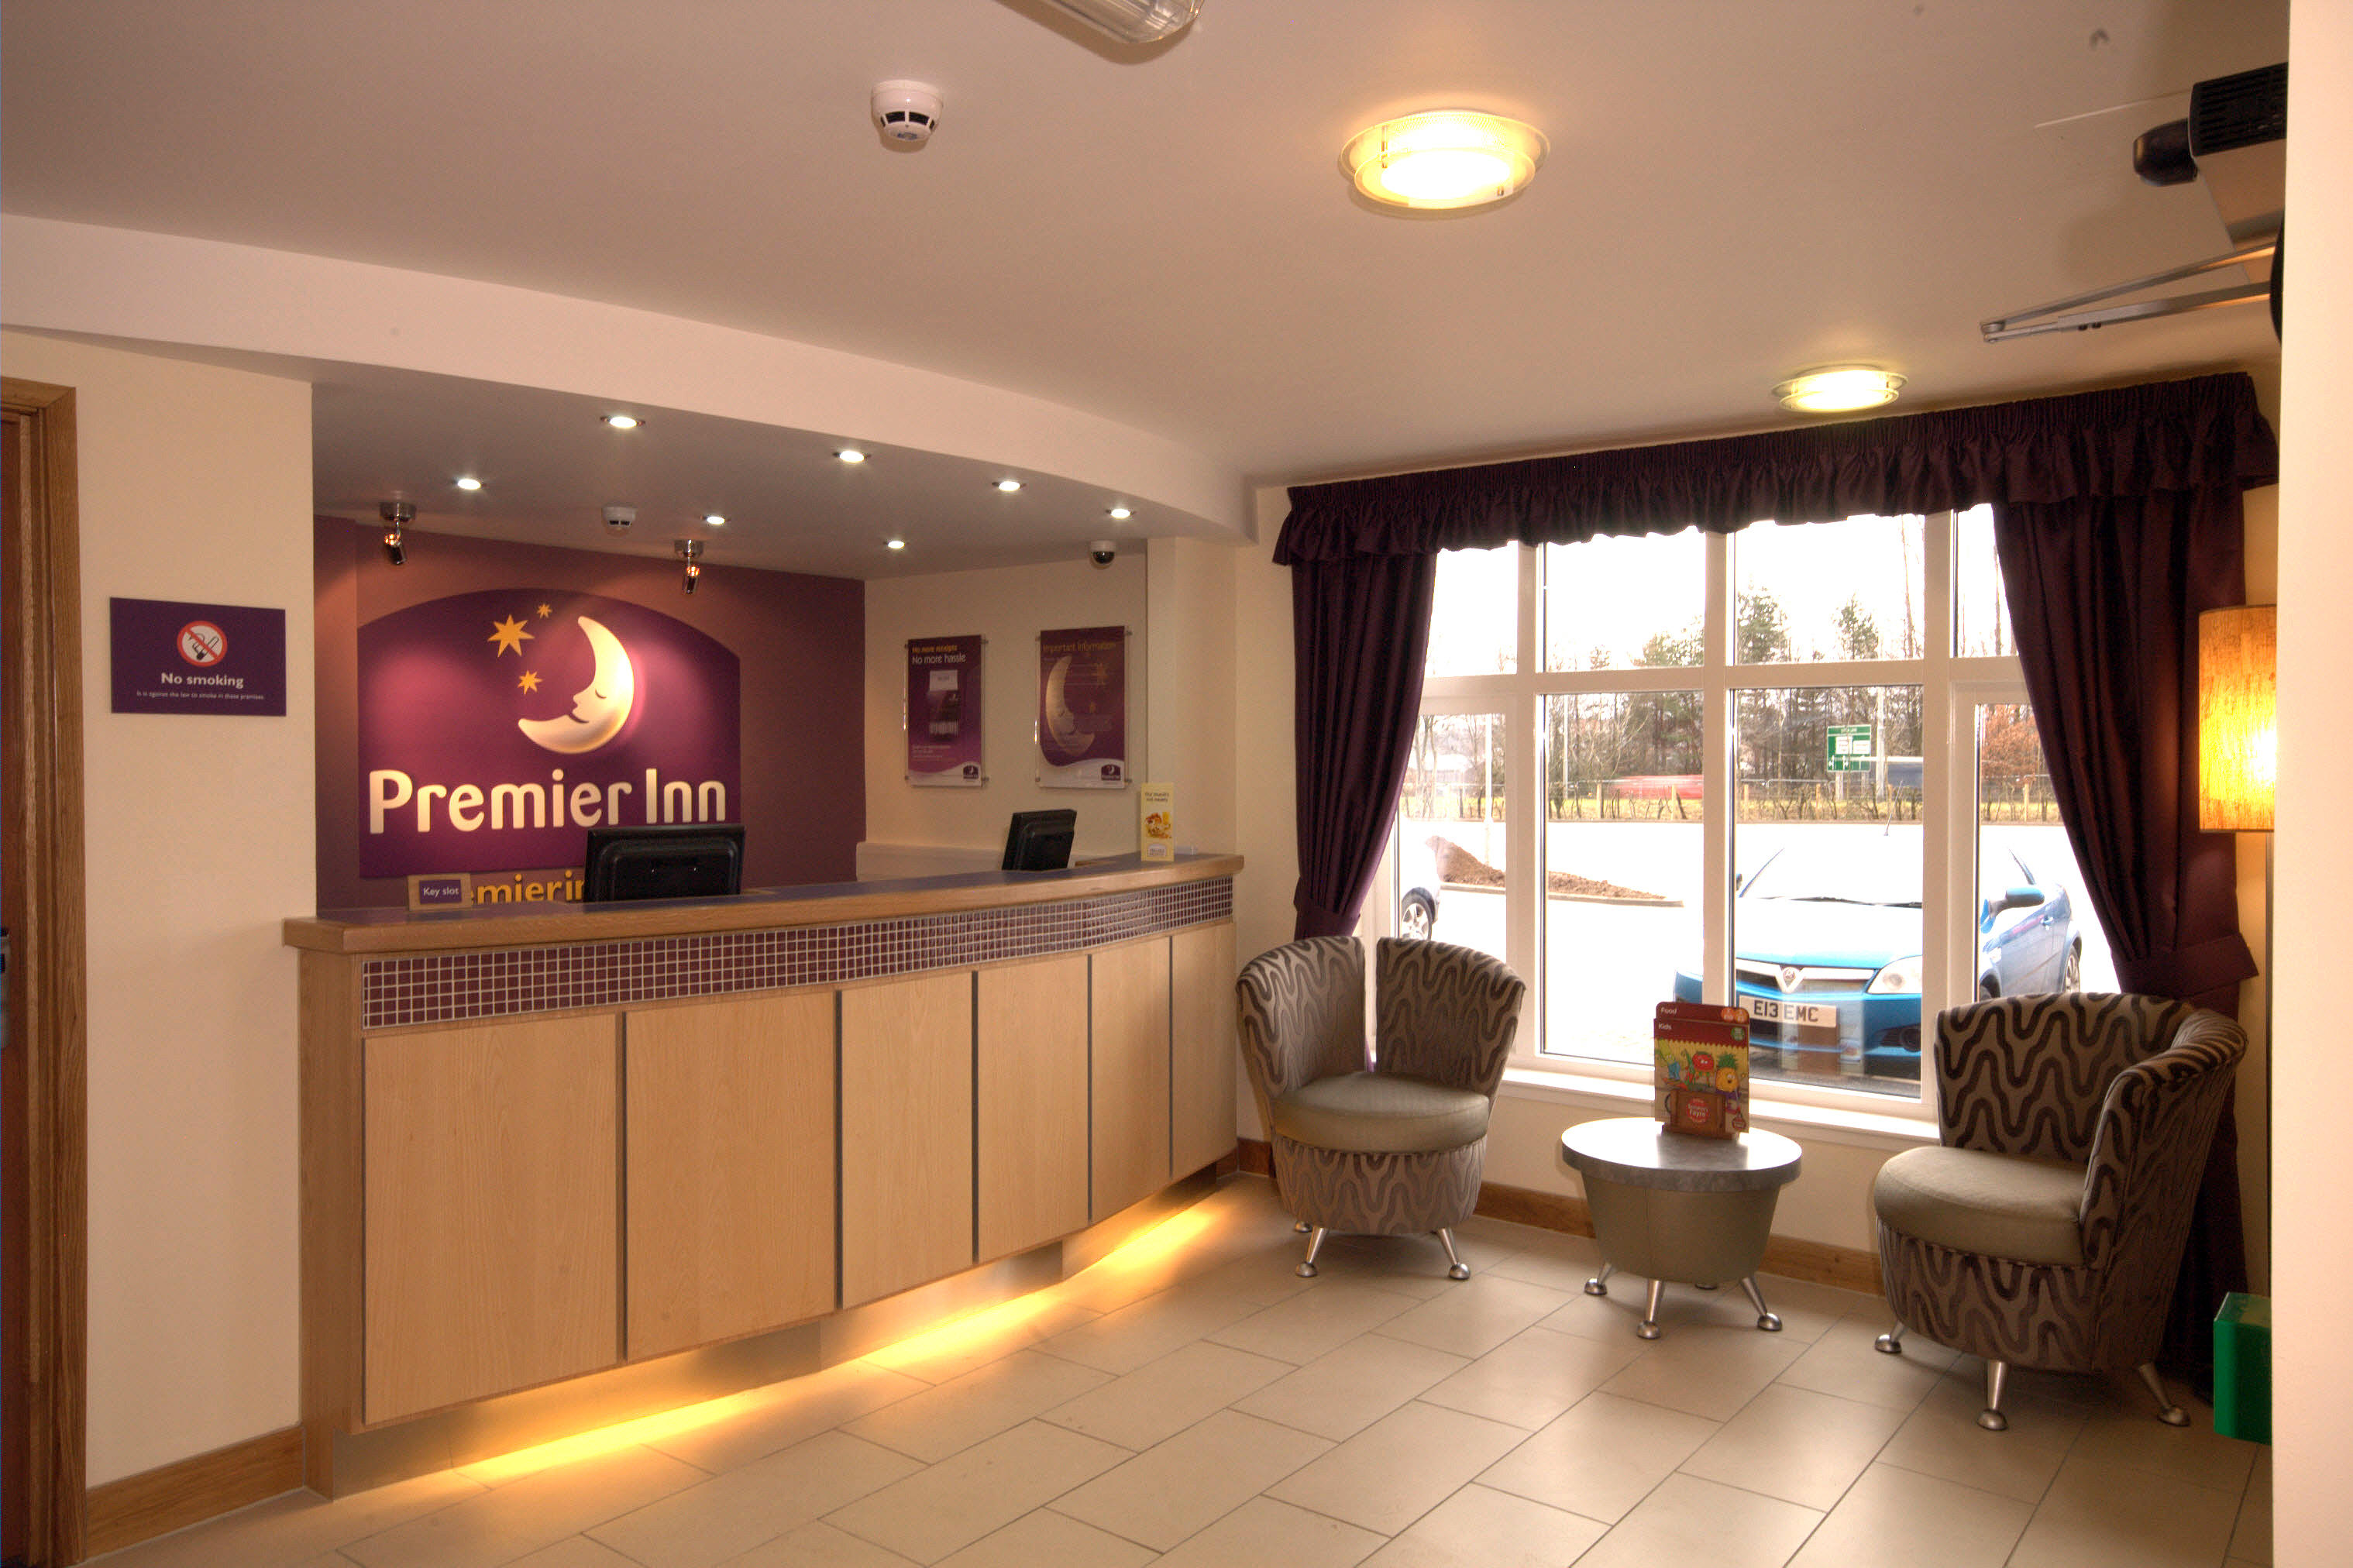 Premier Inn reception Premier Inn Dumbarton/Loch Lomond hotel Dumbarton 03333 219214